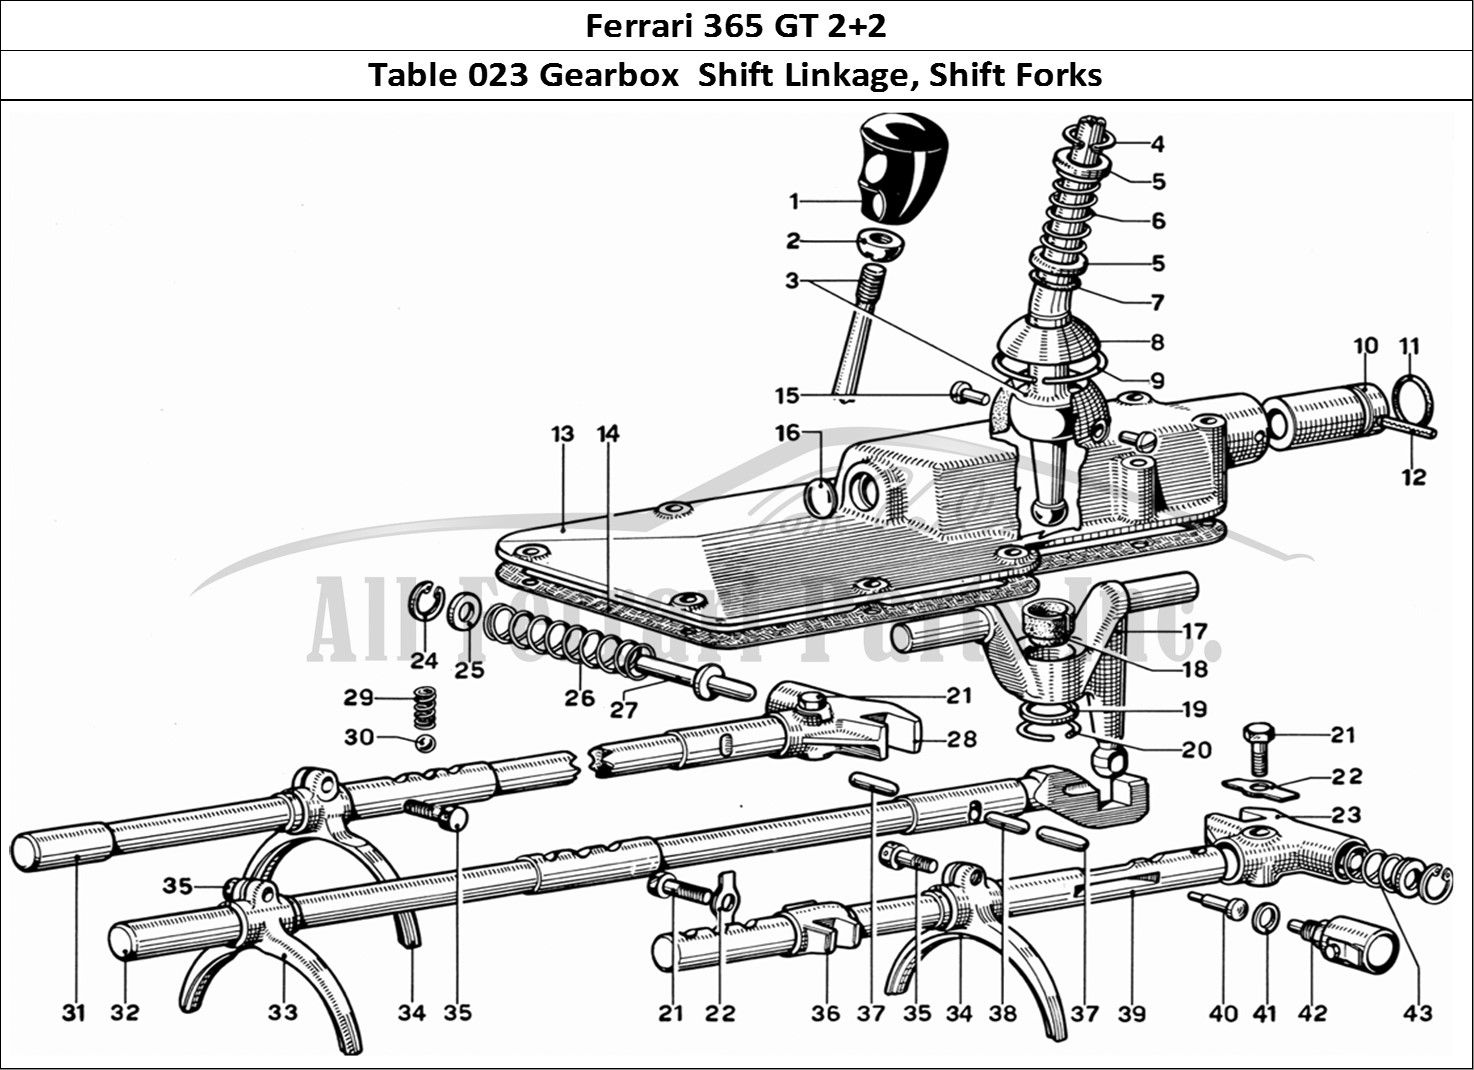 Ferrari Parts Ferrari 365 GT 2+2 (Mechanical) Page 023 Gear Box Controls